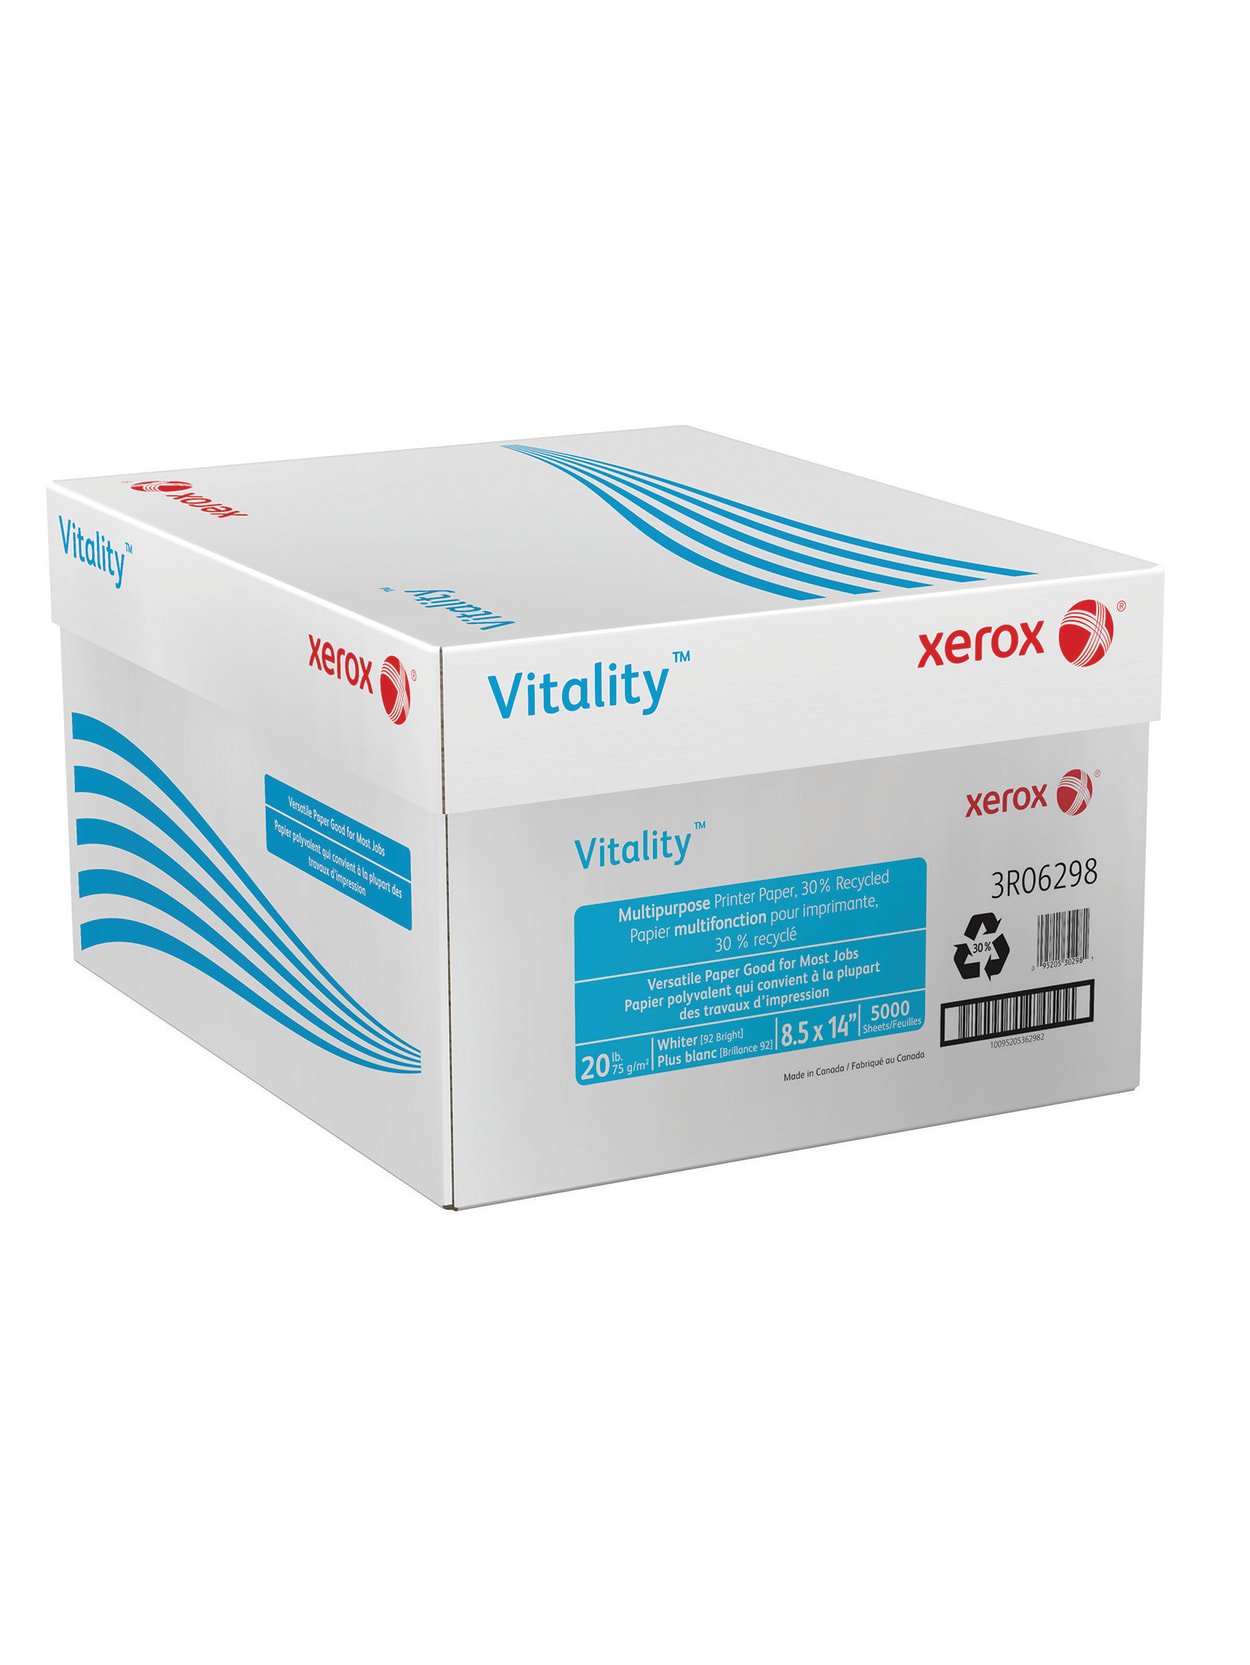 Xerox Paper Boxes